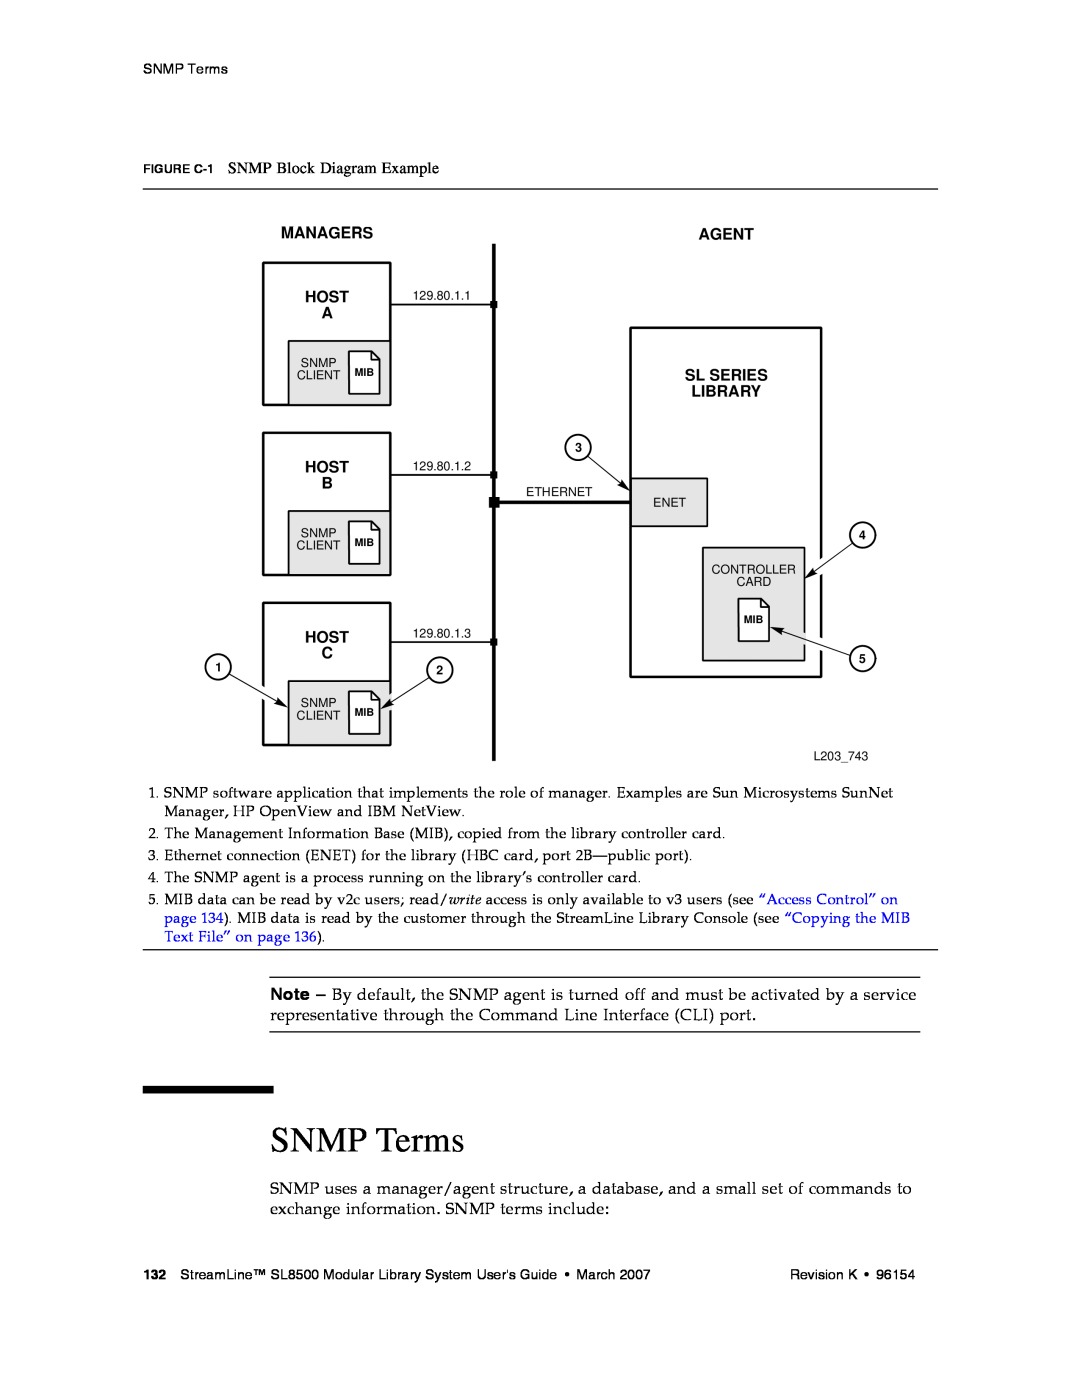 Sun Microsystems SL8500 manual SNMP Terms, FIGURE C-1 SNMP Block Diagram Example 